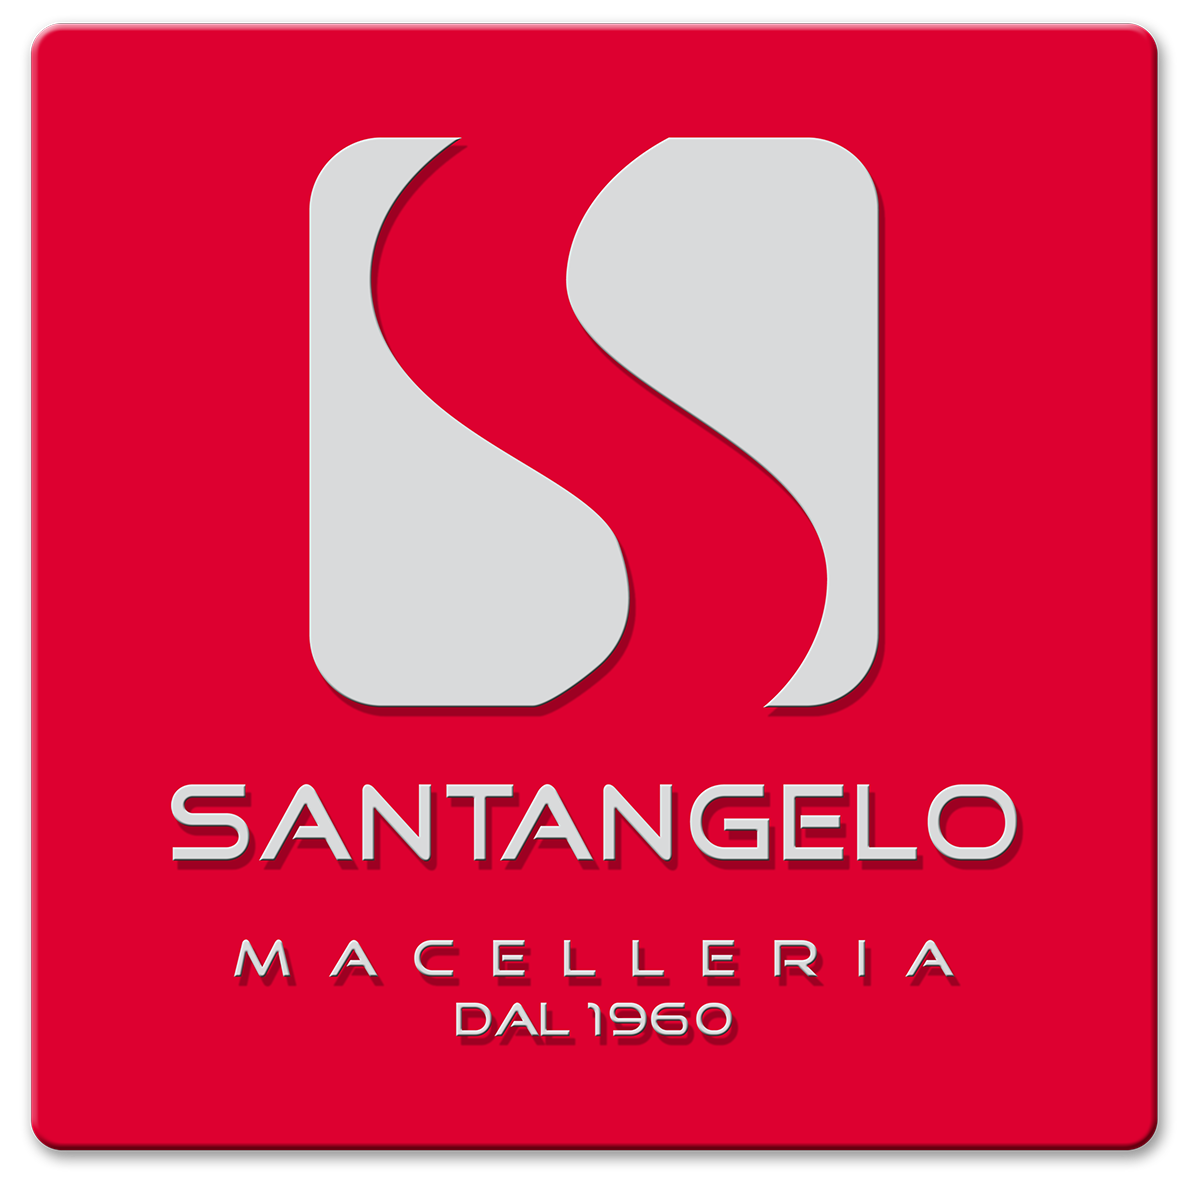 Macelleria Santangelo